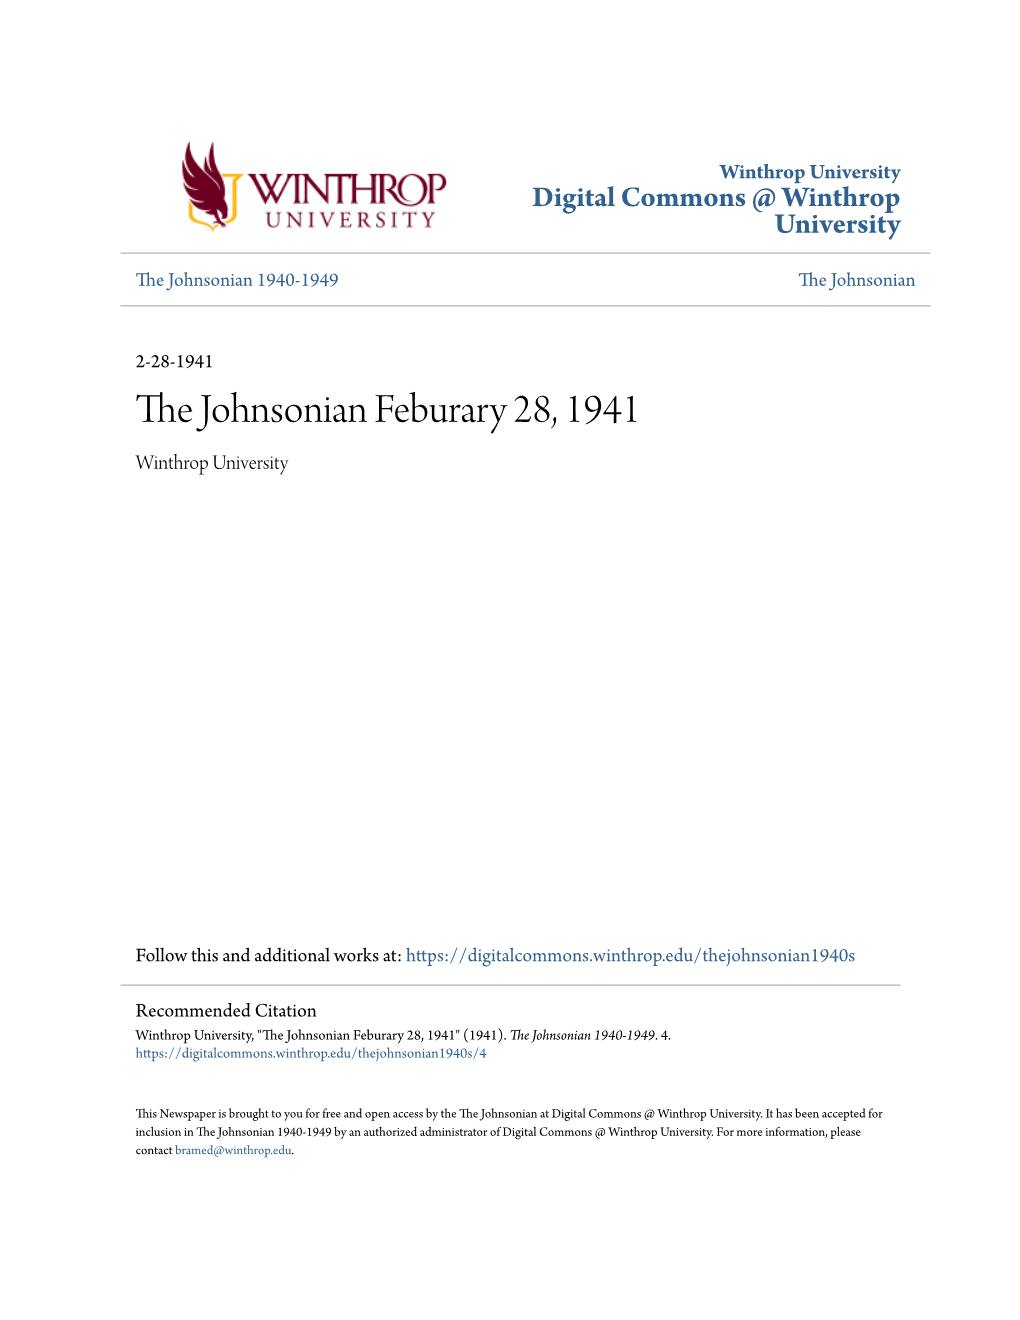 The Johnsonian Feburary 28, 1941